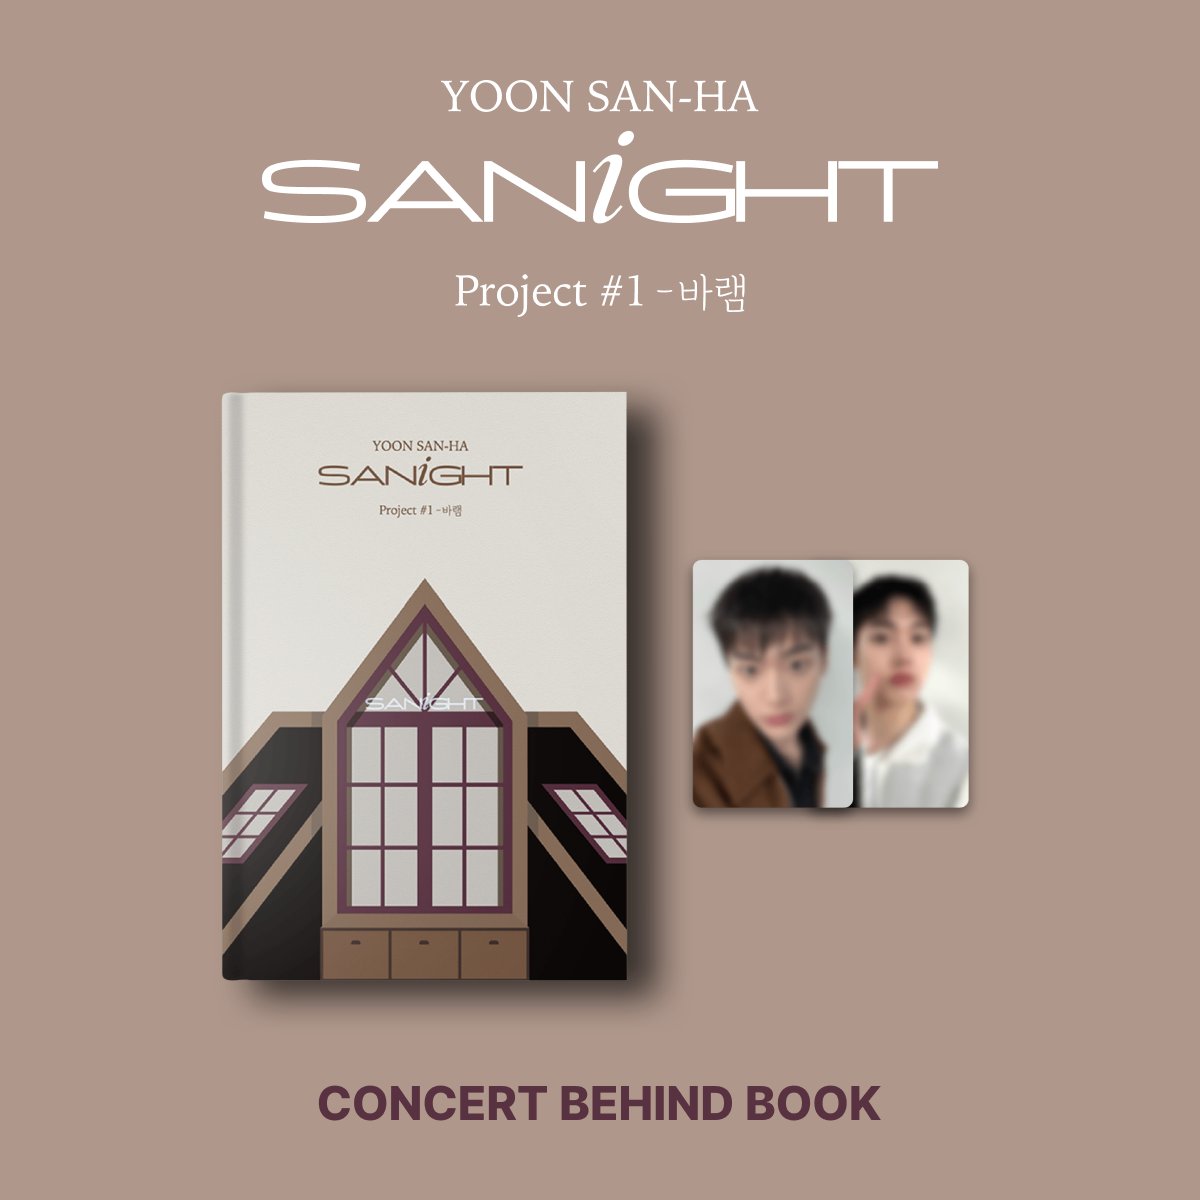 📣 PRE-ORDEN del Concert Behind Book 'YOON SAN-HA: SANiGHT Project #1 - Wish.' ¡Abierta! #YOONSANHA #윤산하 #ユンサナ @offclASTRO